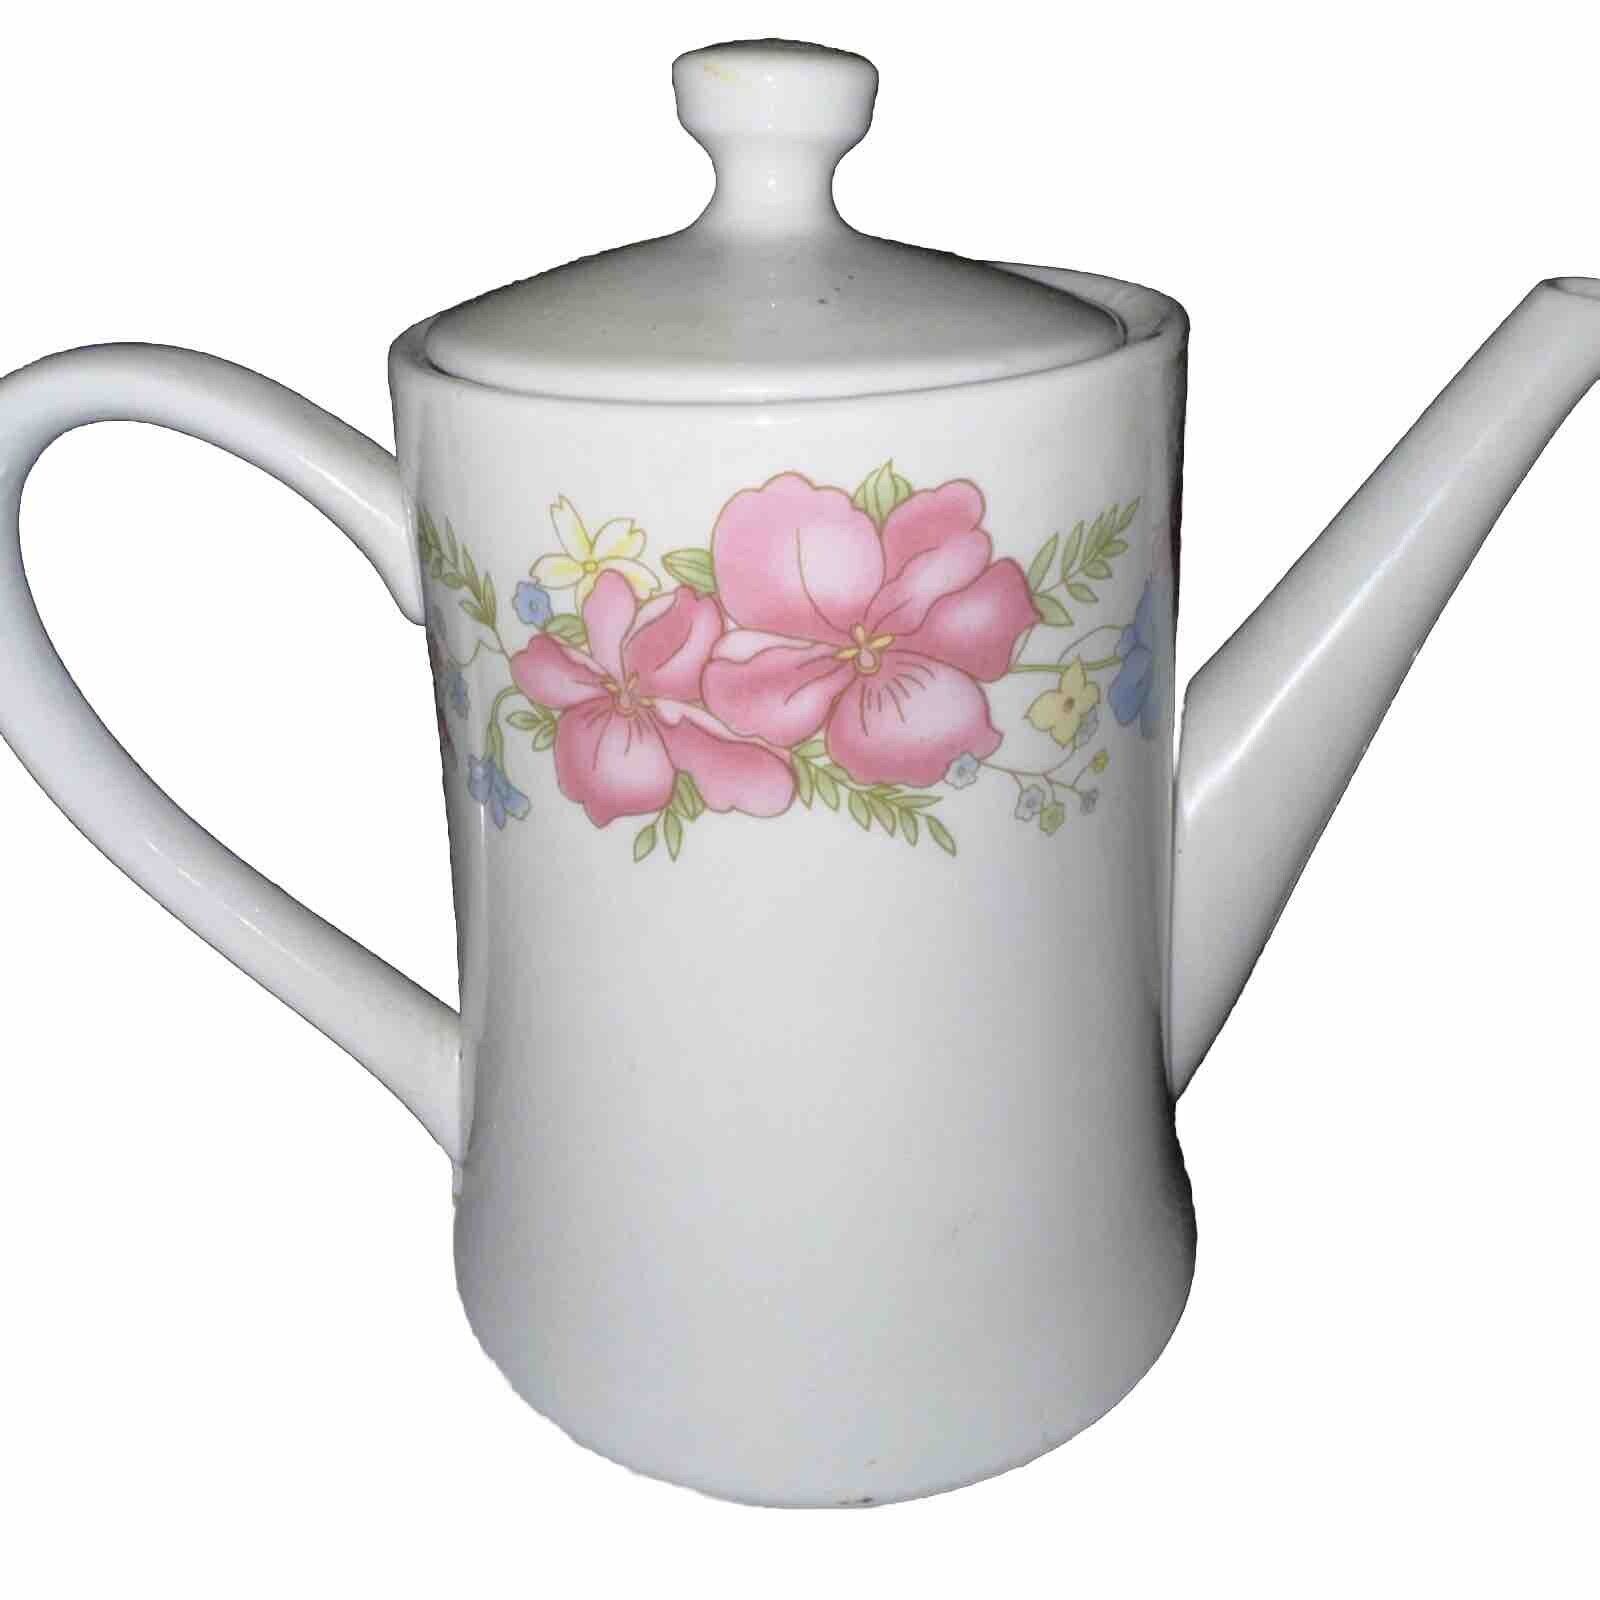 Vintage Imported McCrory’s White Floral Porcelain Tea Pitcher